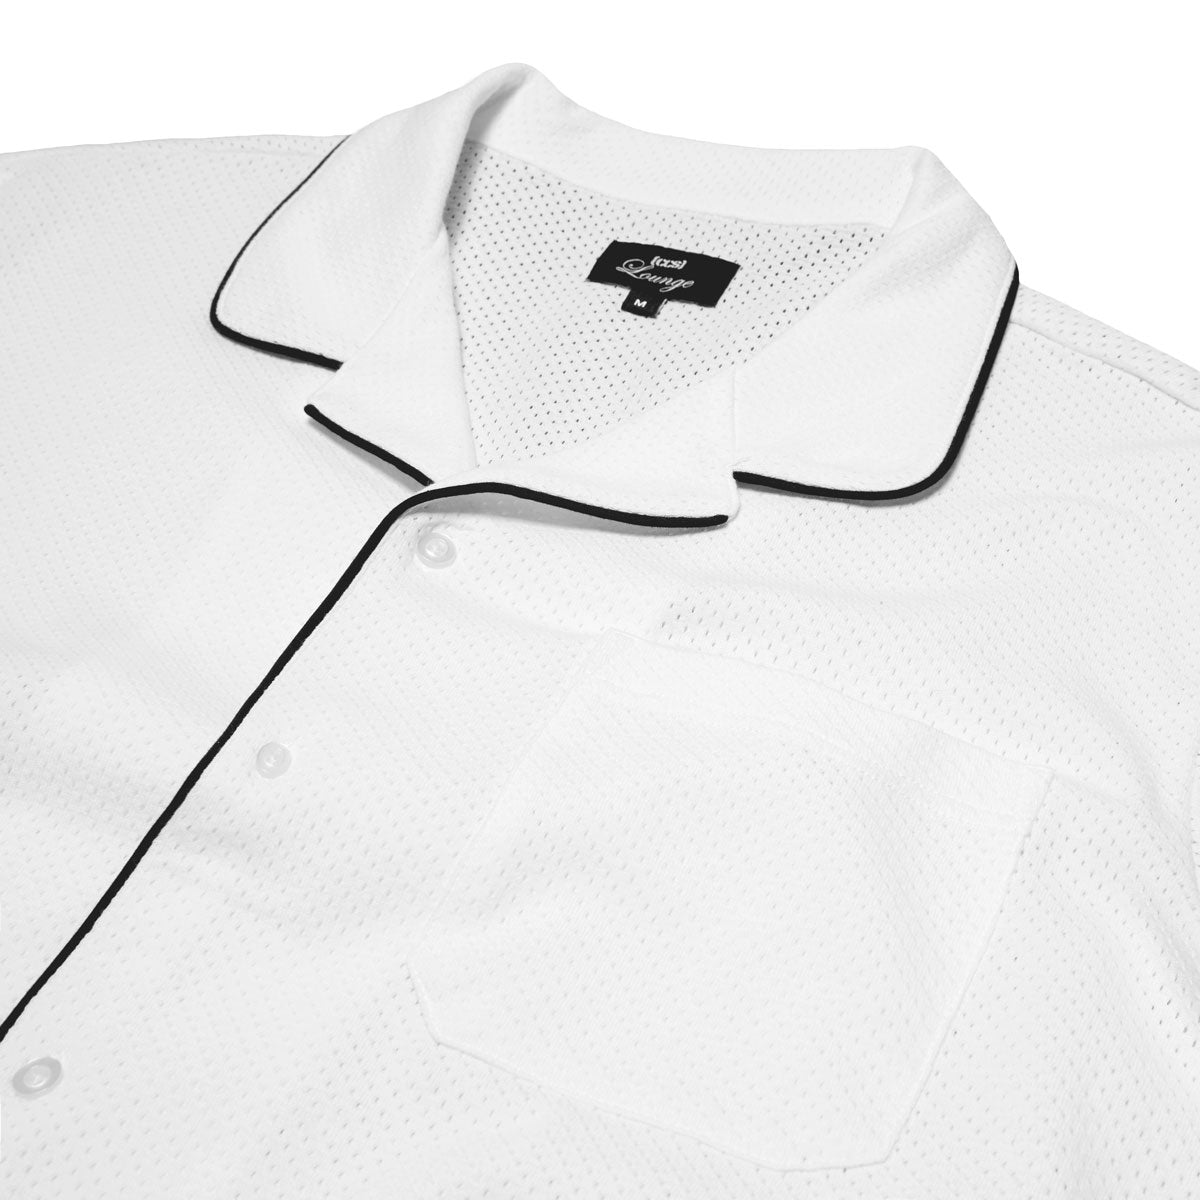 CCS Lounge Mesh Shirt - White image 3